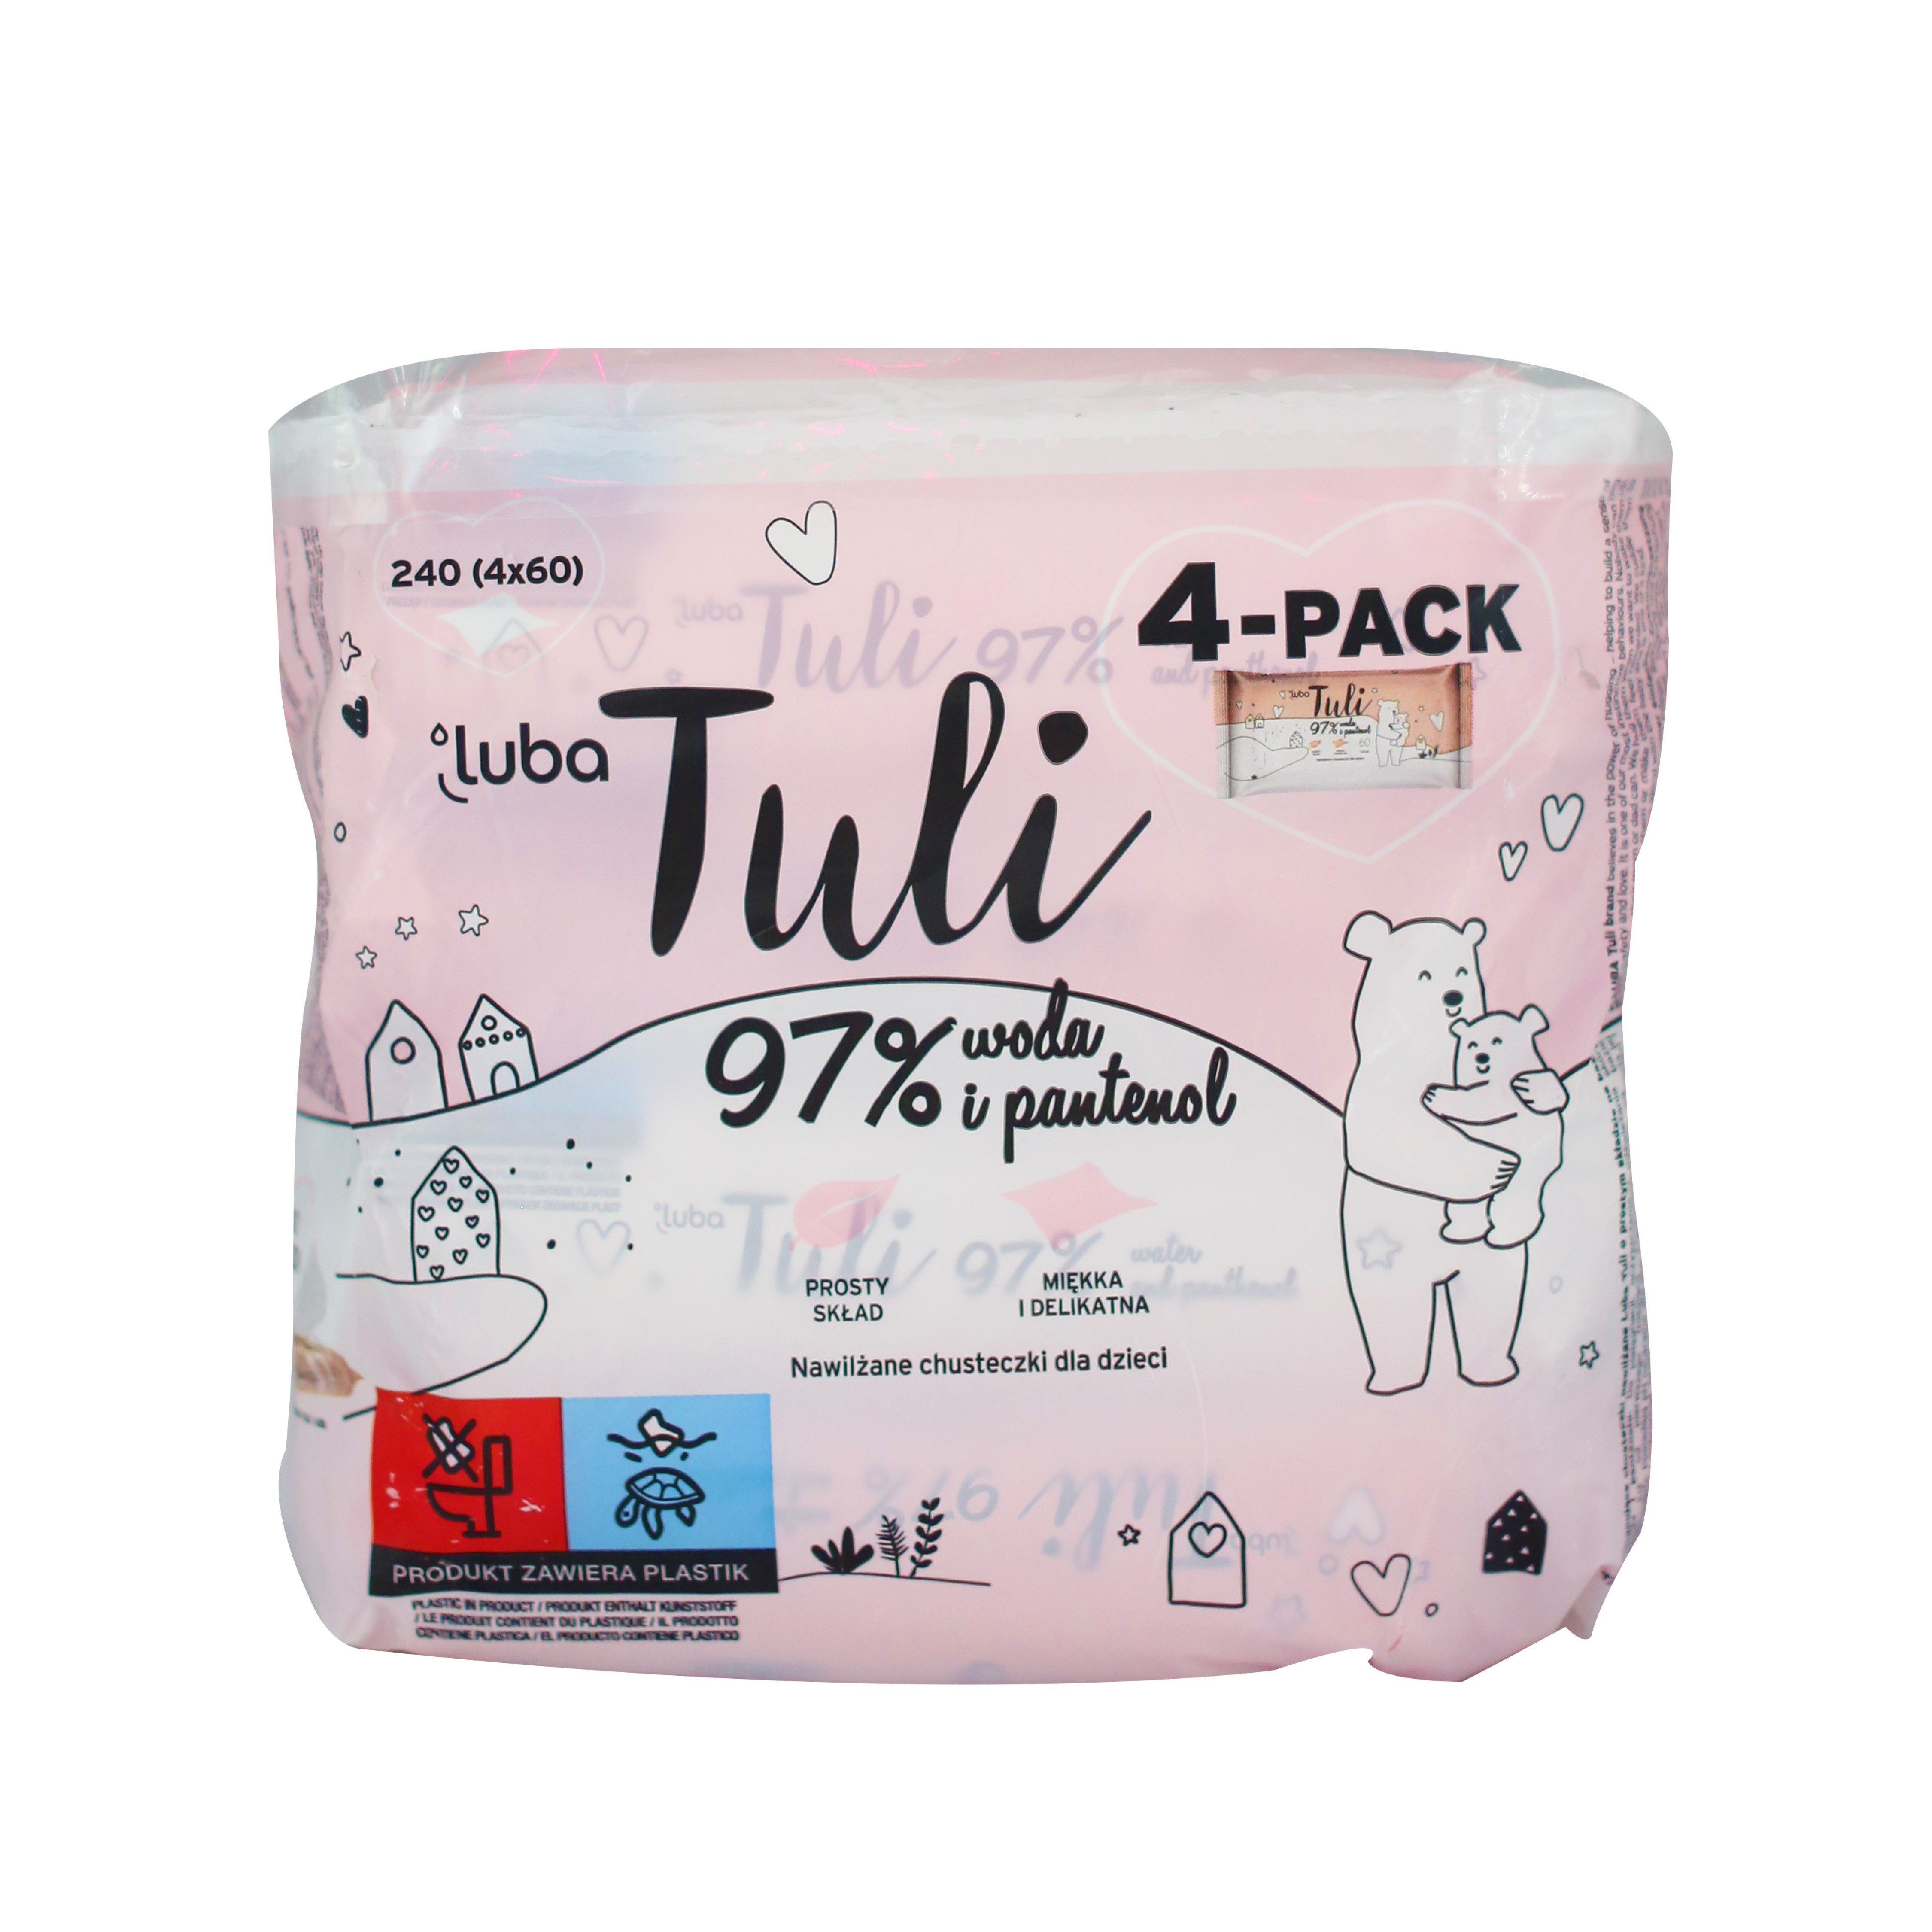 Дитячі вологі серветки Luba Tuli, 97% води и пантенол, 240 шт. (4 упаковки по 60 шт.) - фото 1